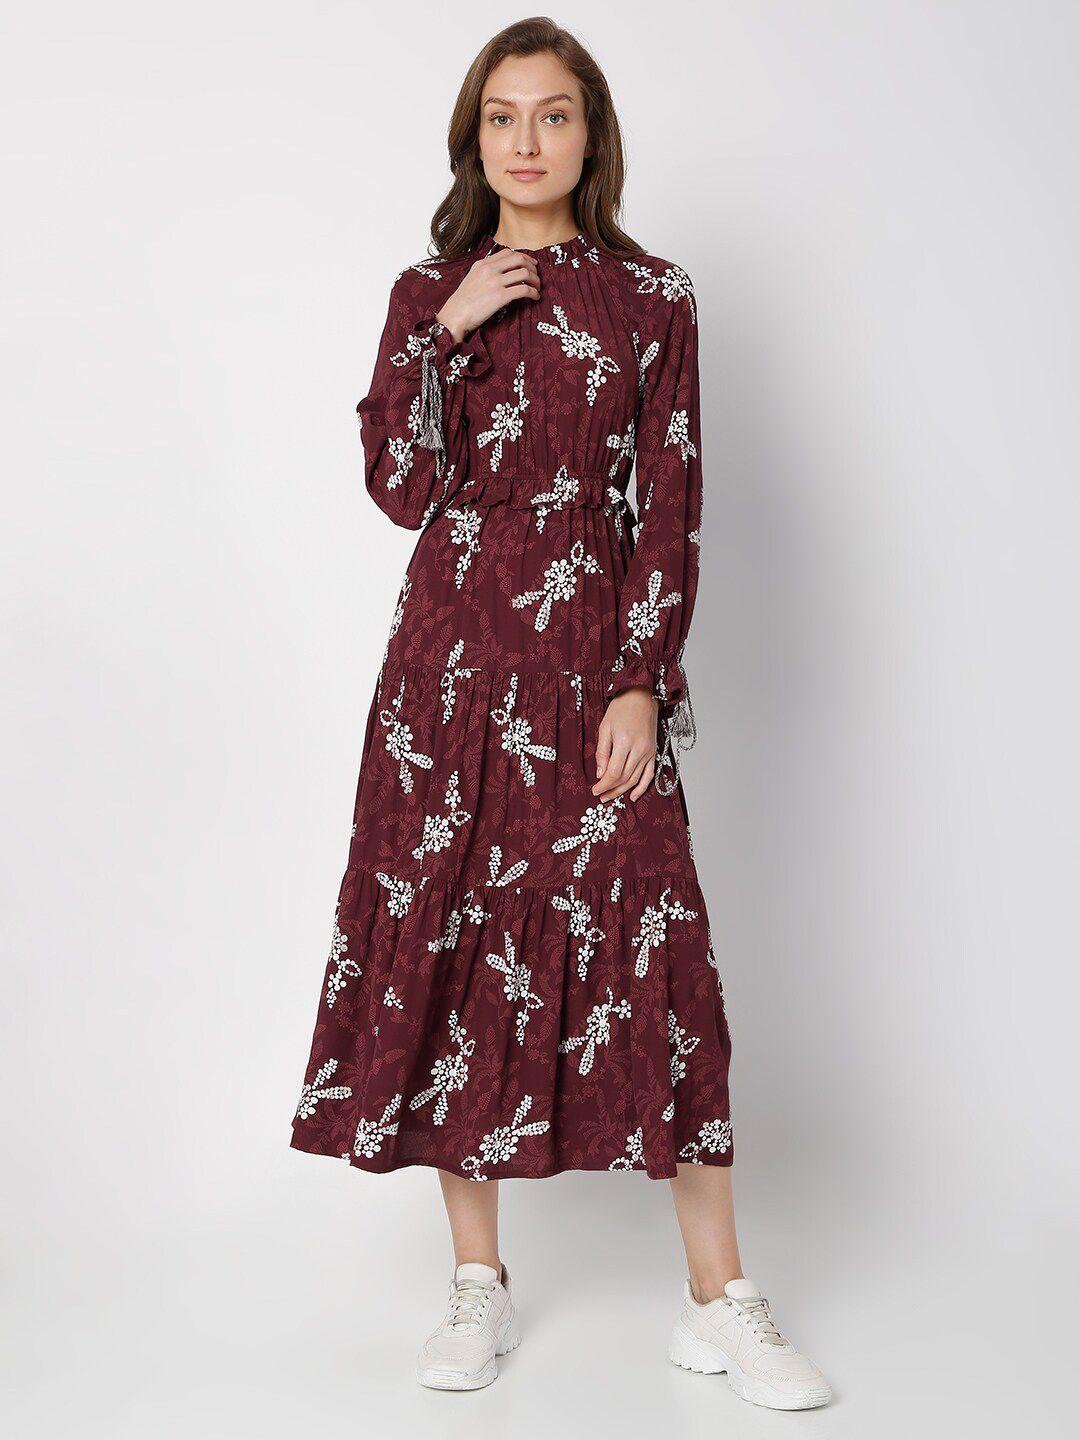 vero moda maroon floral a-line mini dress